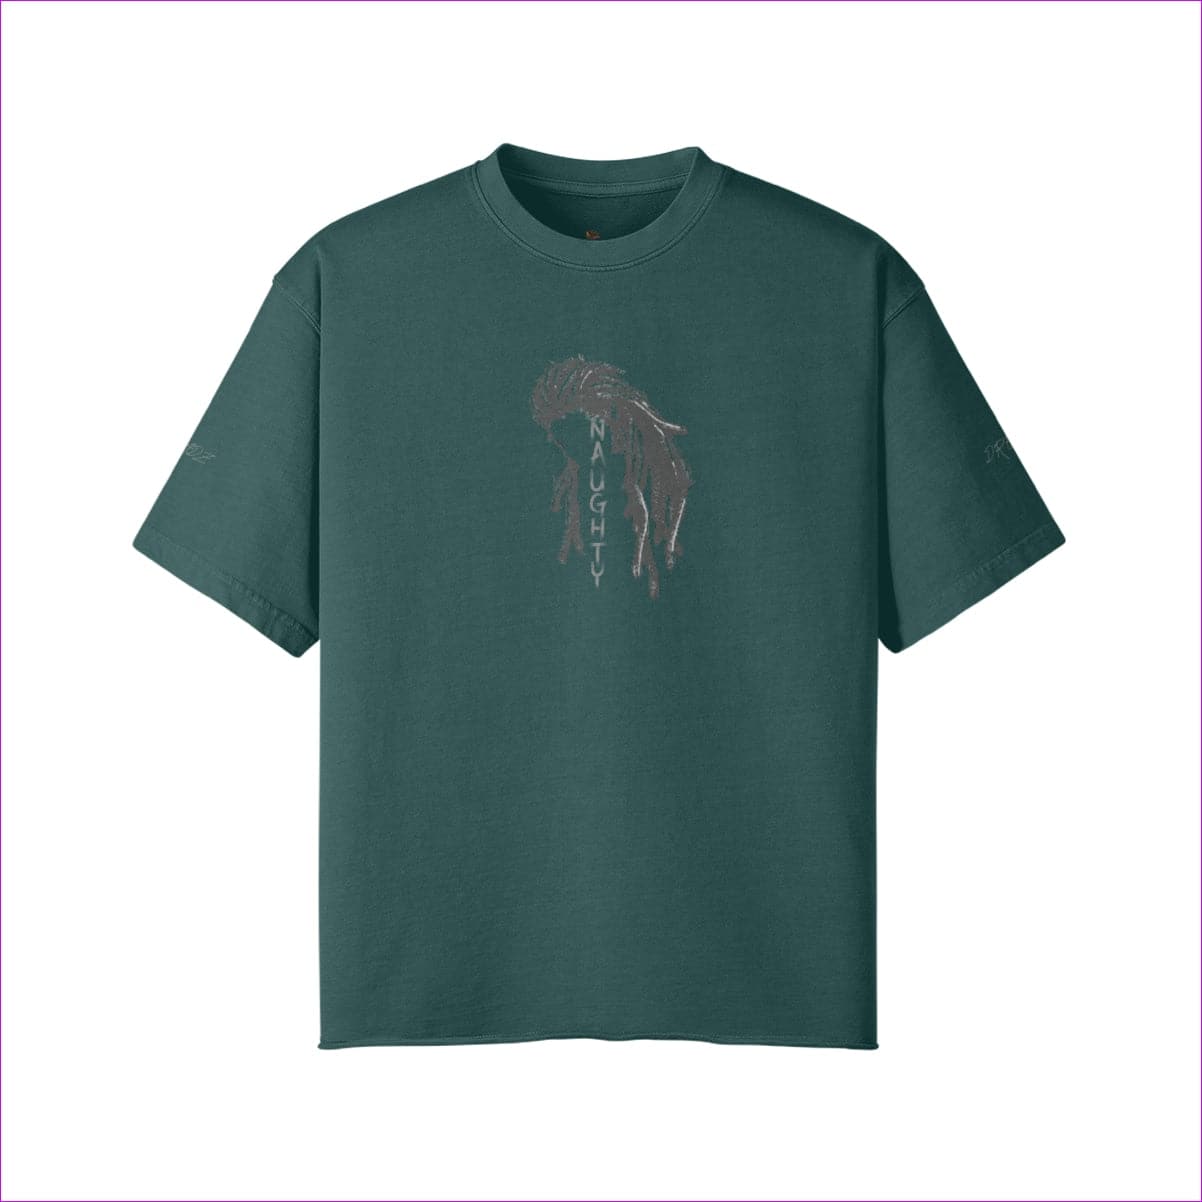 Vintage Green Naughty Dreadz Washed Raw Edge T-shirt - 8 colors - men's t-shirt at TFC&H Co.